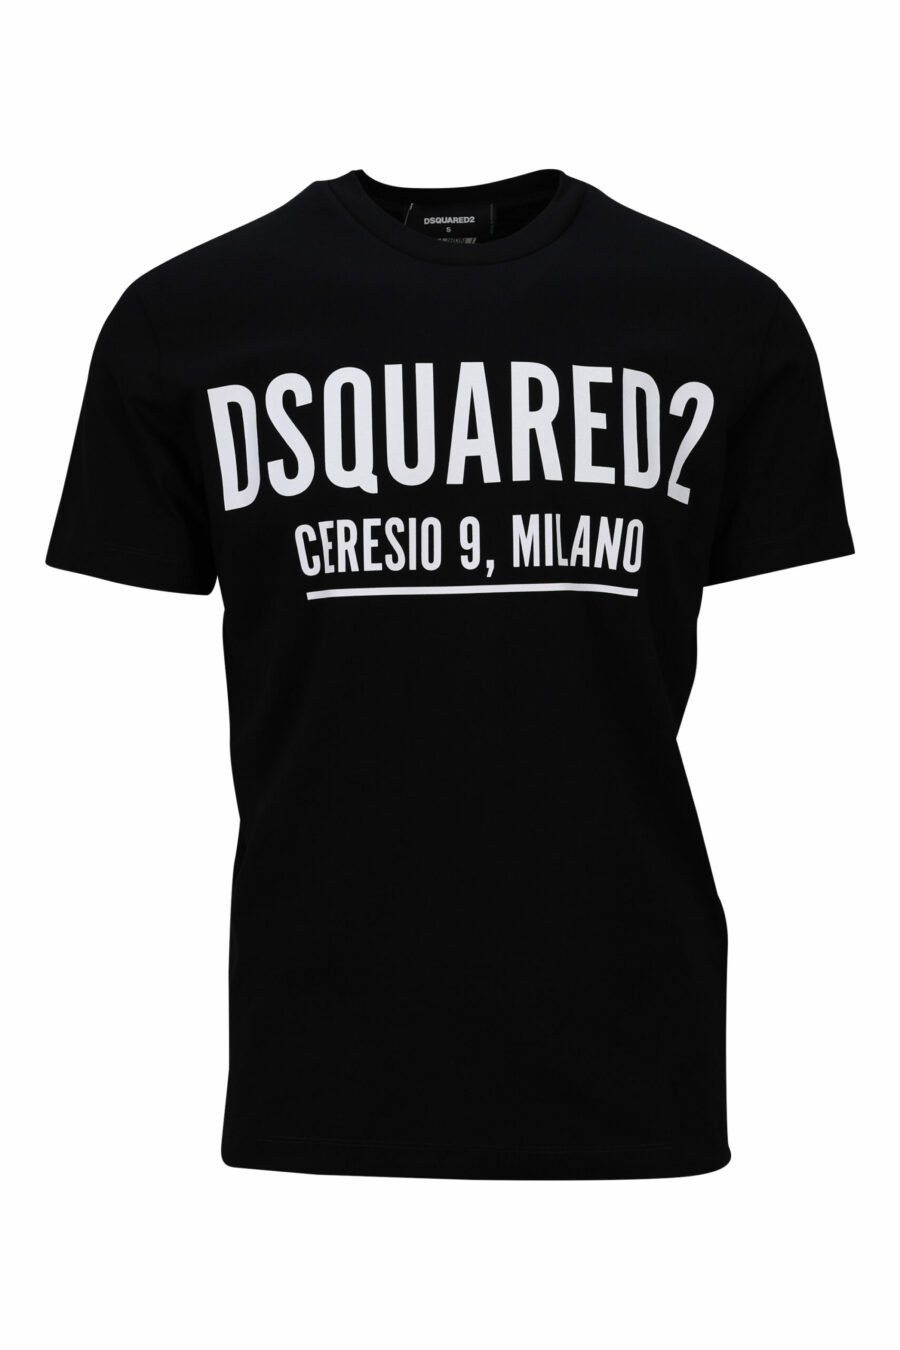 Black T-shirt with maxilogo "ceresio 9 milano" - 8054148504984 scaled